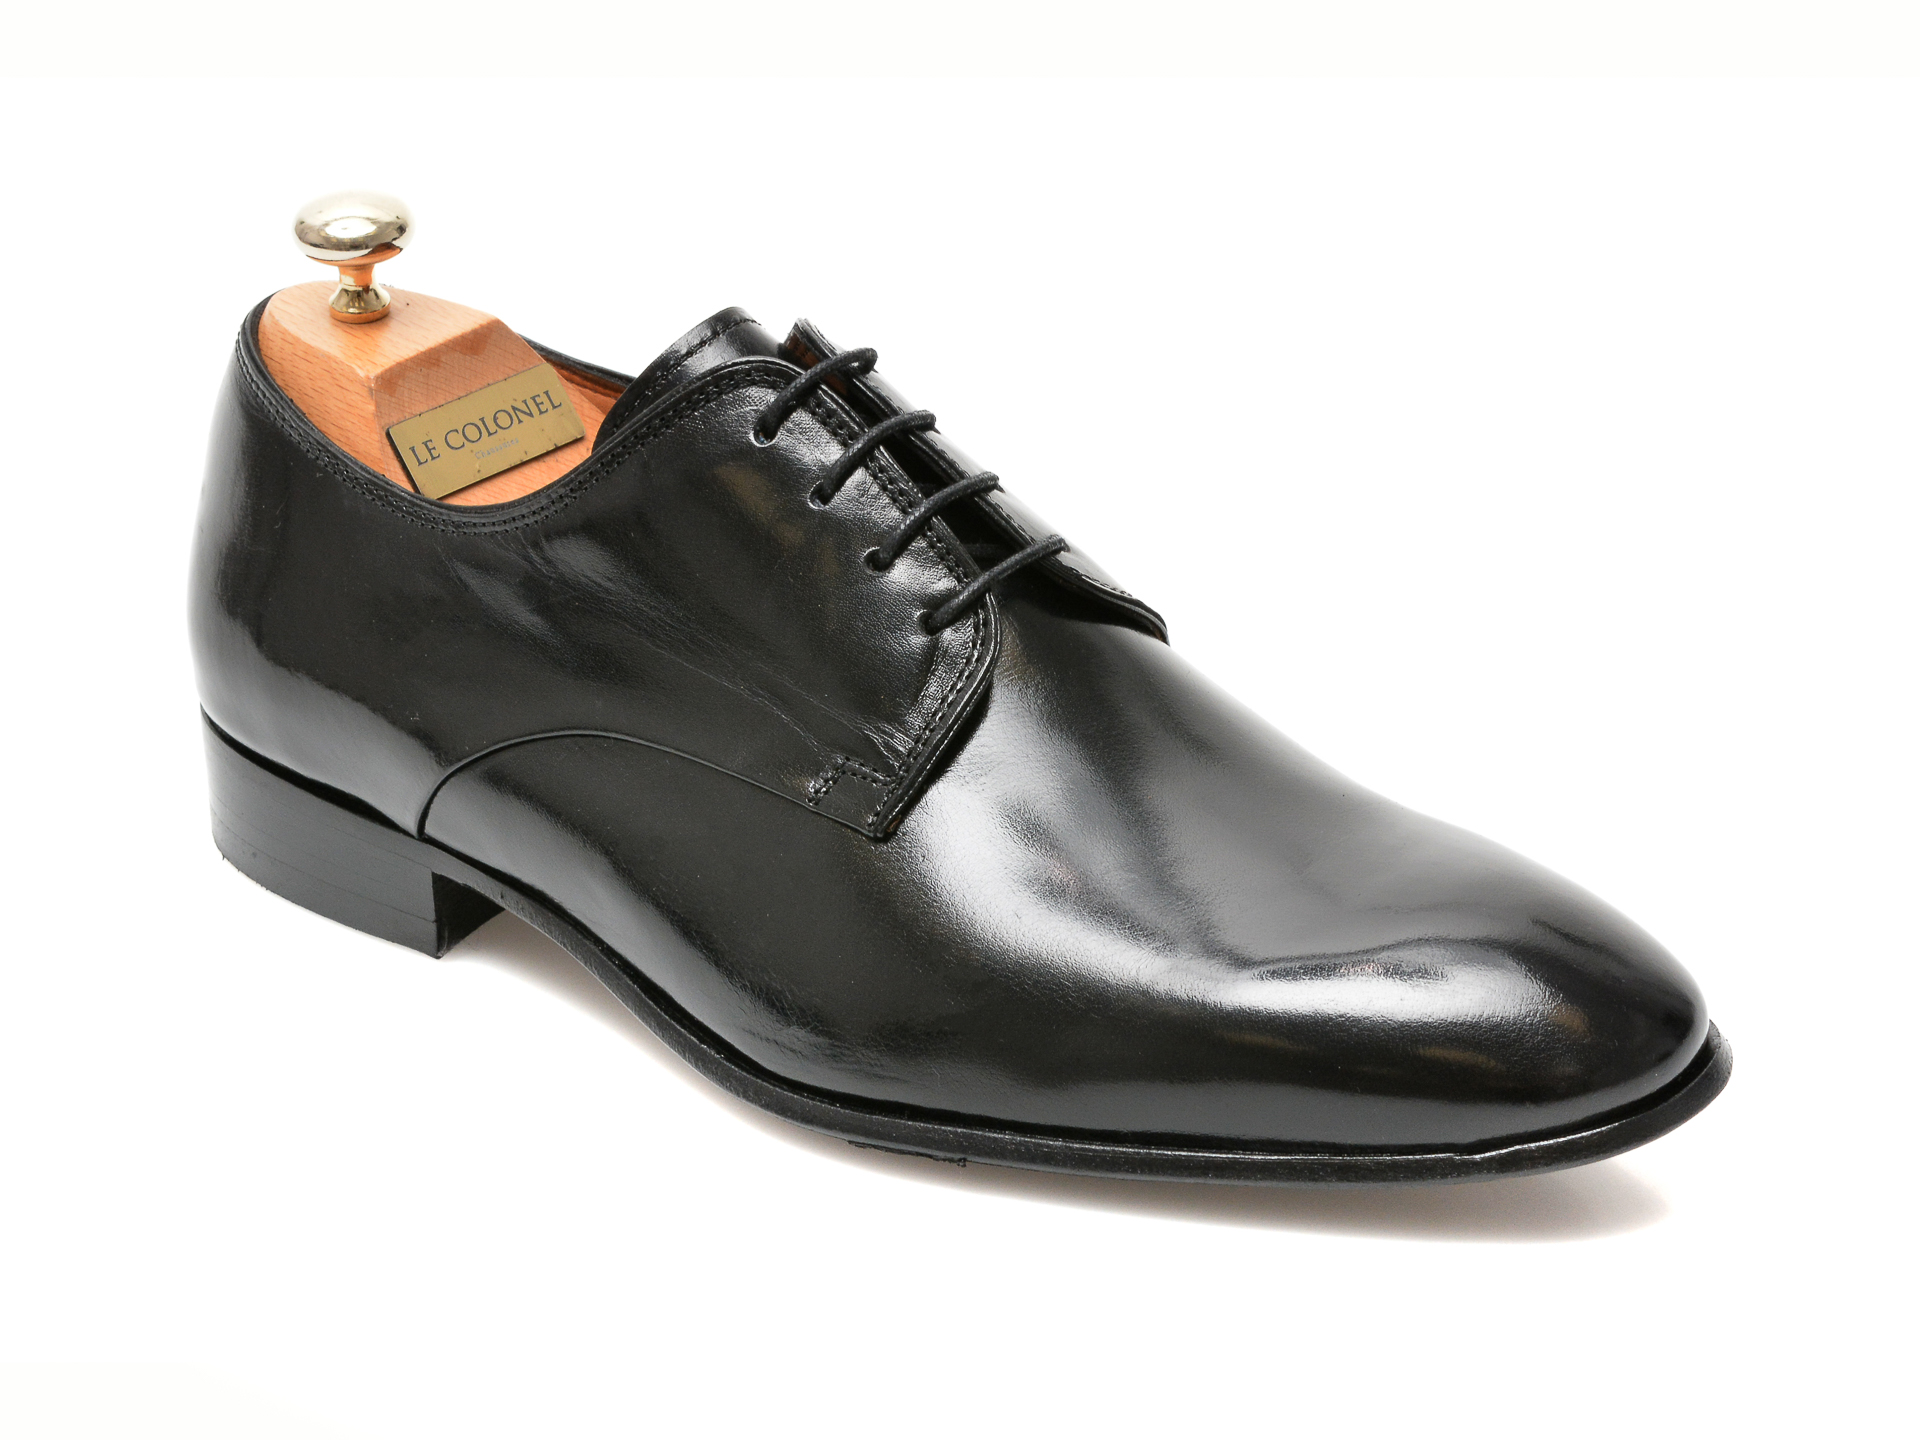 Pantofi LE COLONEL negri, 49817, din piele naturala Le Colonel imagine 2022 13clothing.ro